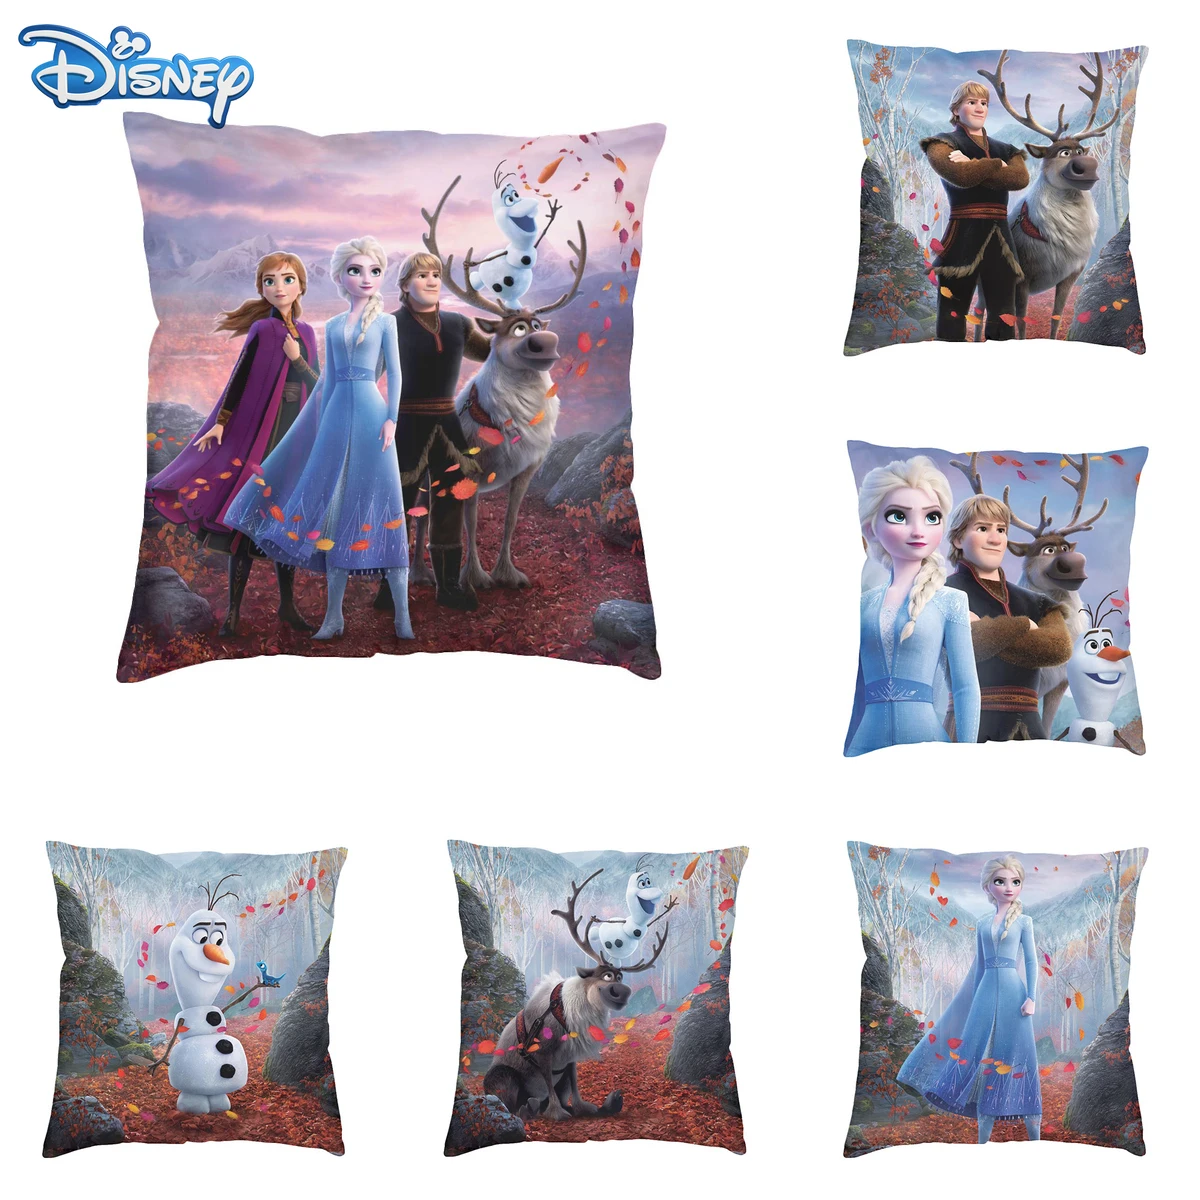 

Disney Cartoon Cushion Cover Frozen Elsa Anna Princess PillowCase Decorative/Nap Room Sofa Decorative pillows Baby Children Gift